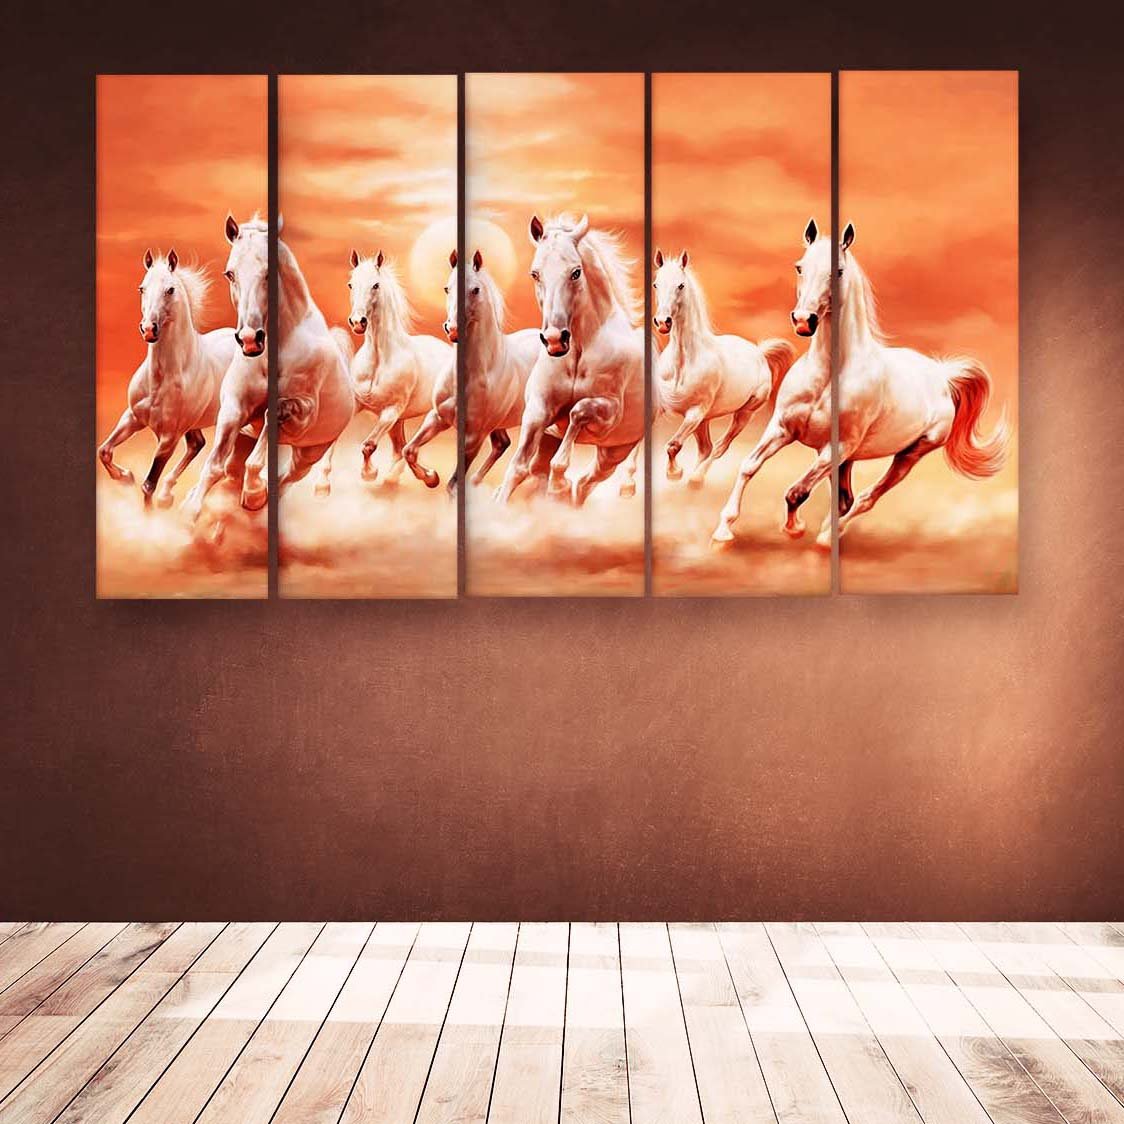 Casperme Vastu 7 Horses Running Wall Painting For Living Room for Bedroom, Hotels & Office Decoration (48×30 inhes)